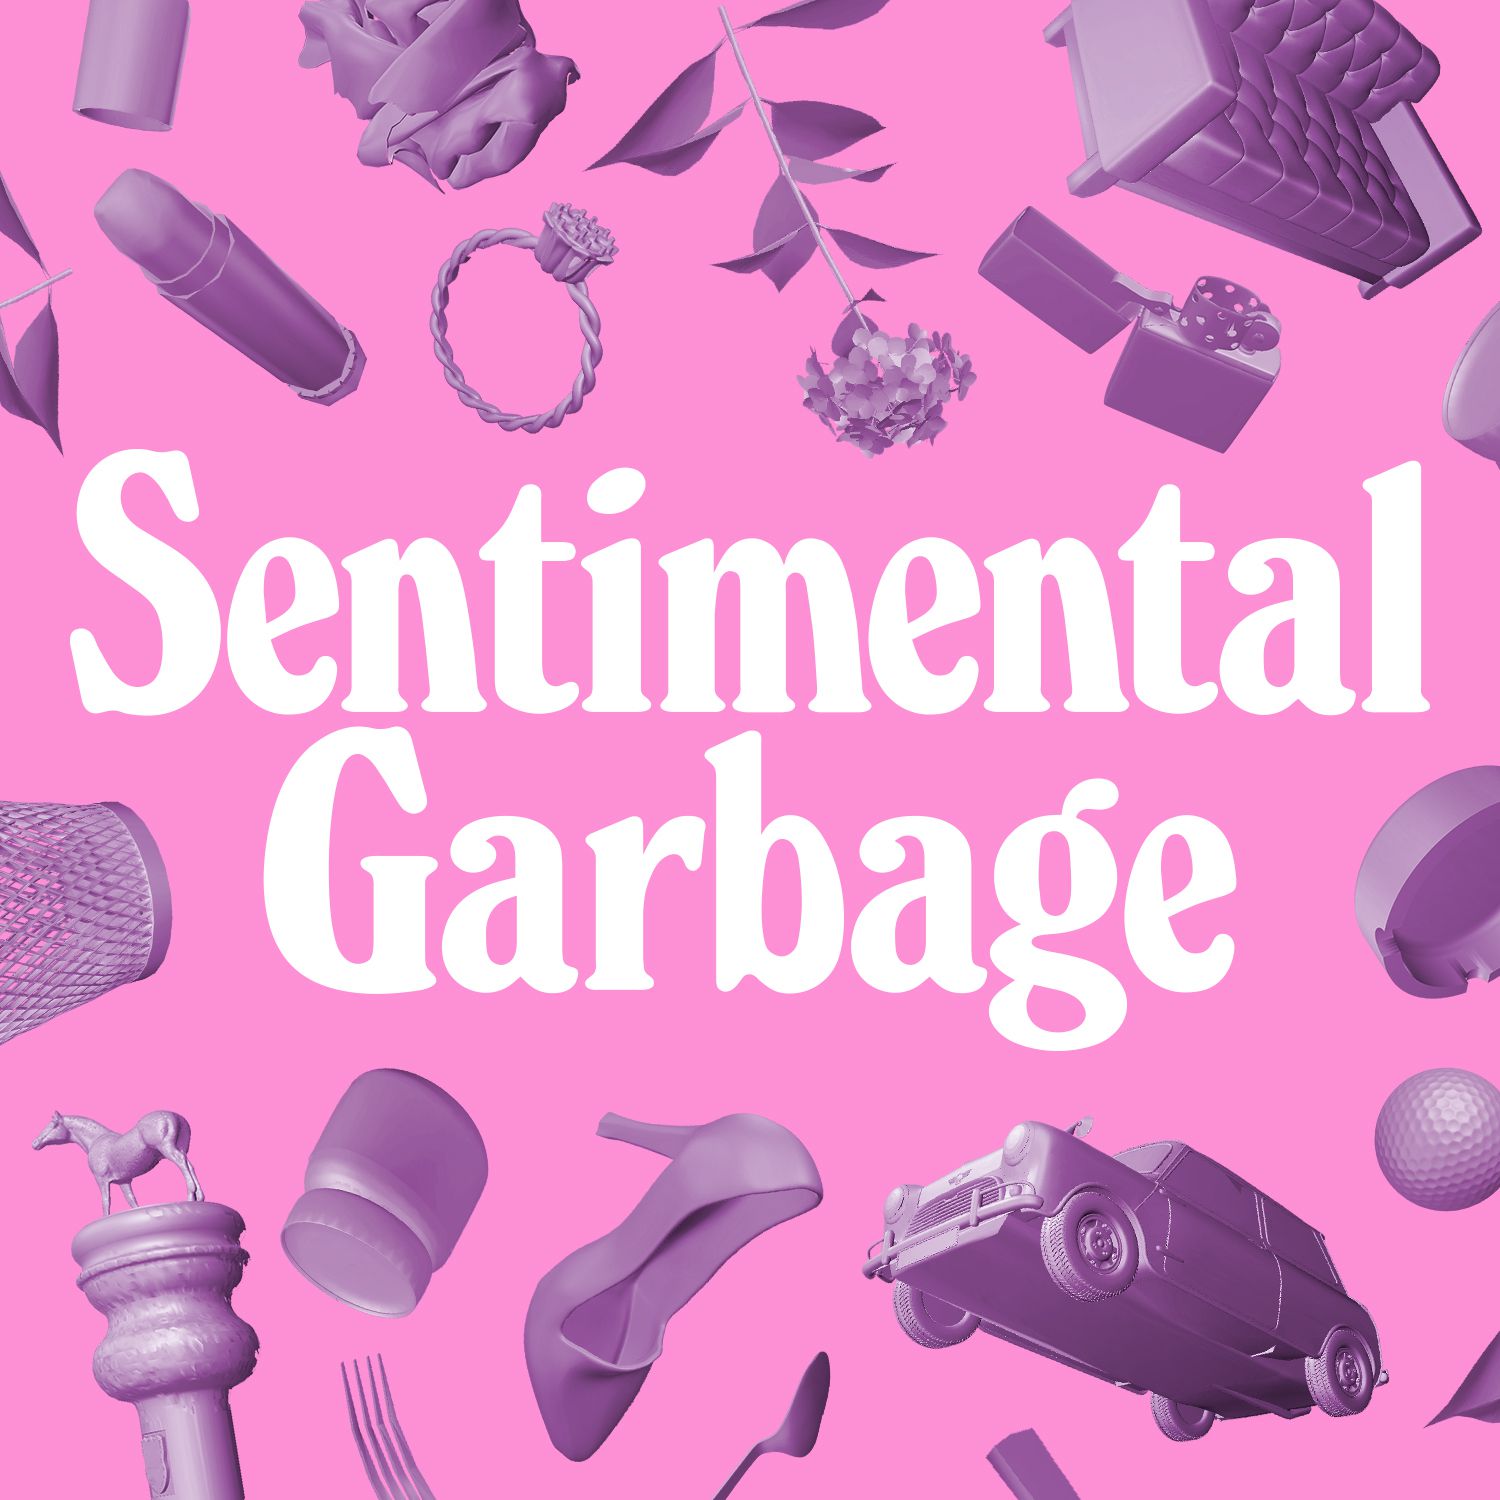 Image: Sentimental Garbage